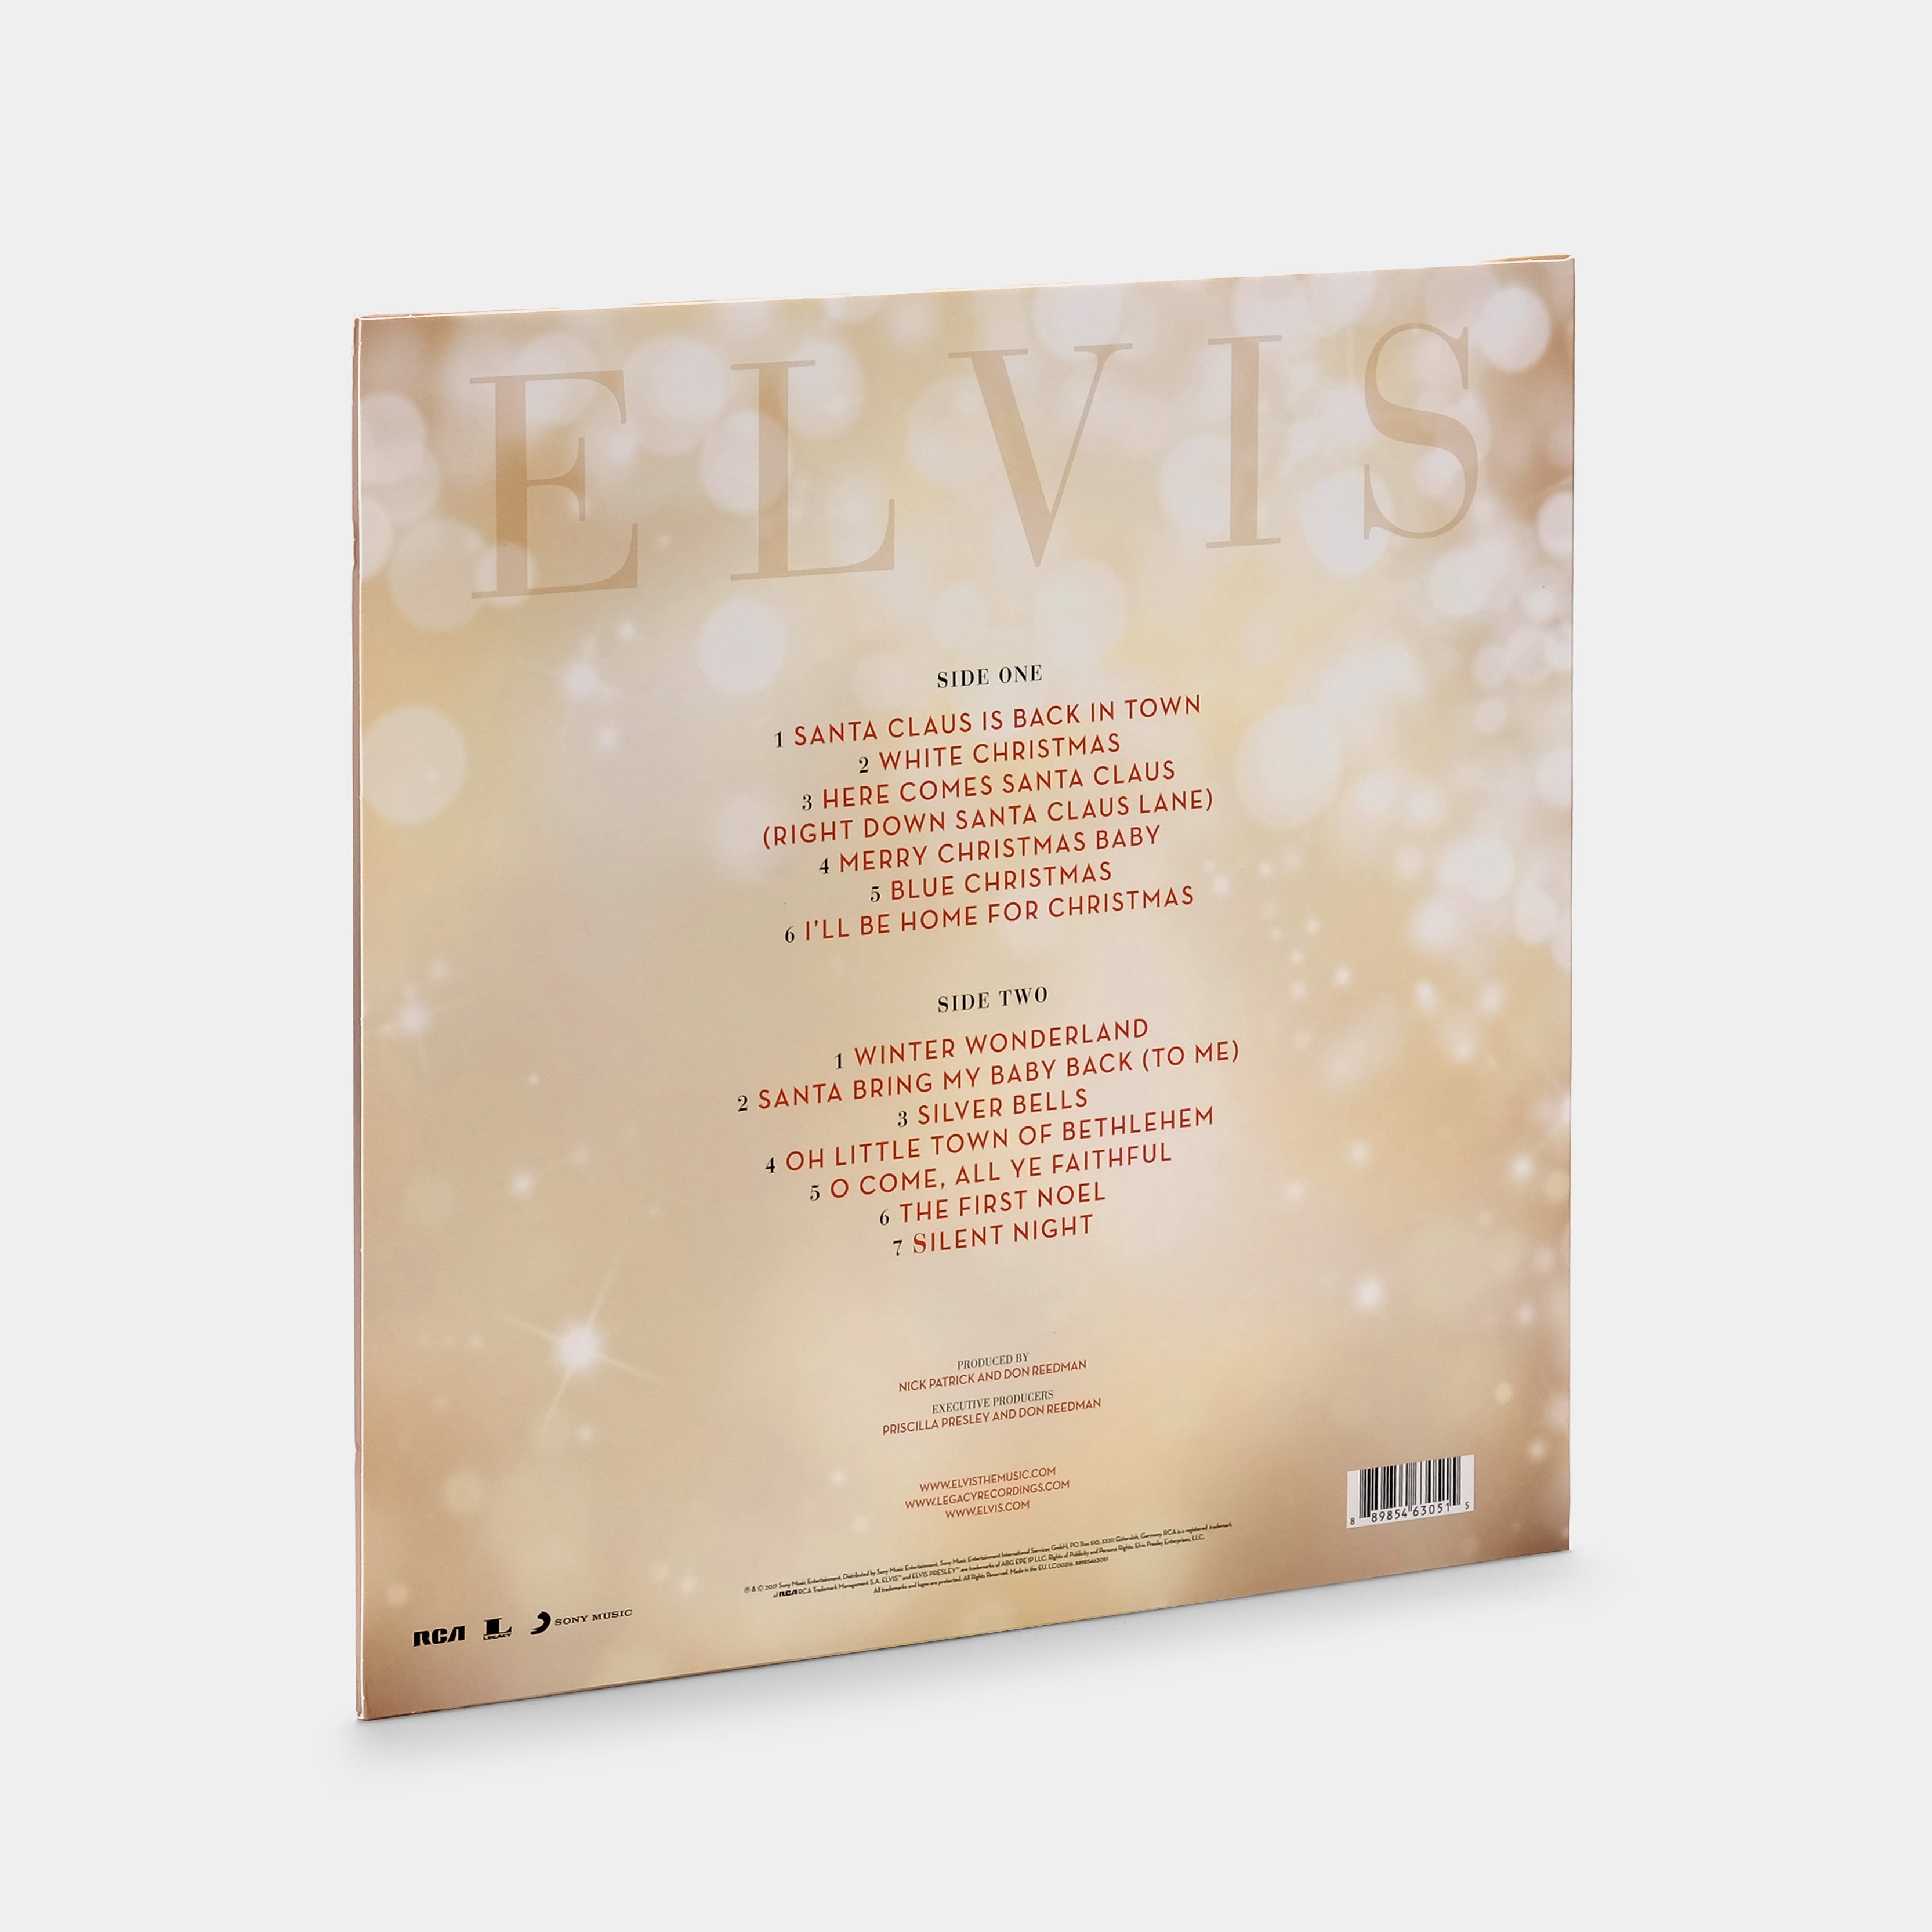 Elvis Presley & The Royal Philharmonic Orchestra - Christmas With Elvis & The Royal Philharmonic Orchestra LP Vinyl Record